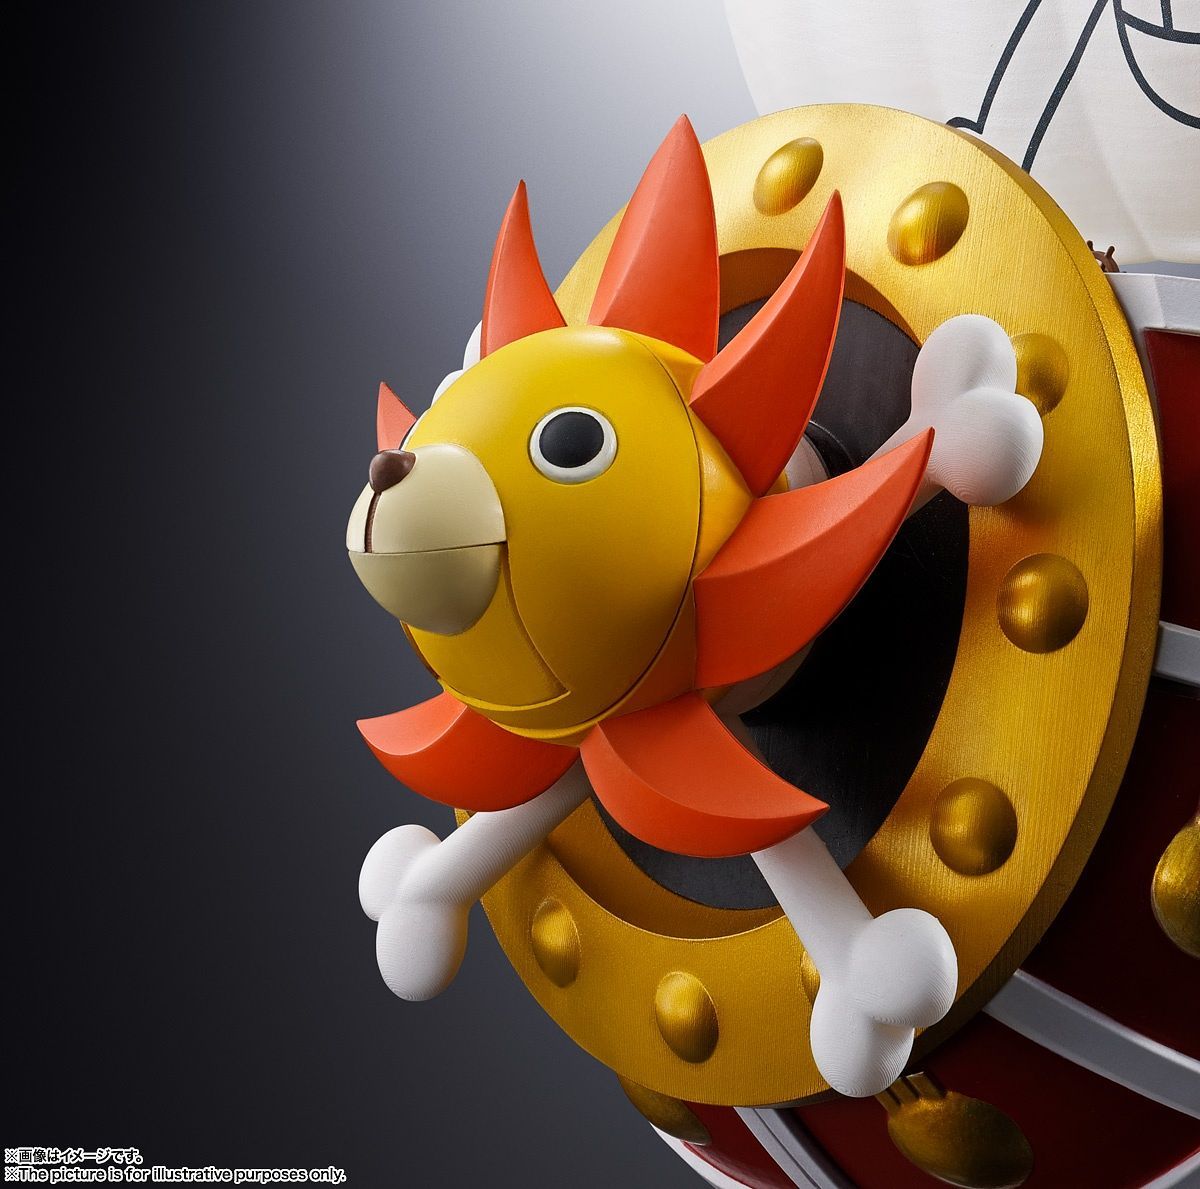 Bandai - Chogokin - One Piece - Thousand Sunny - Marvelous Toys